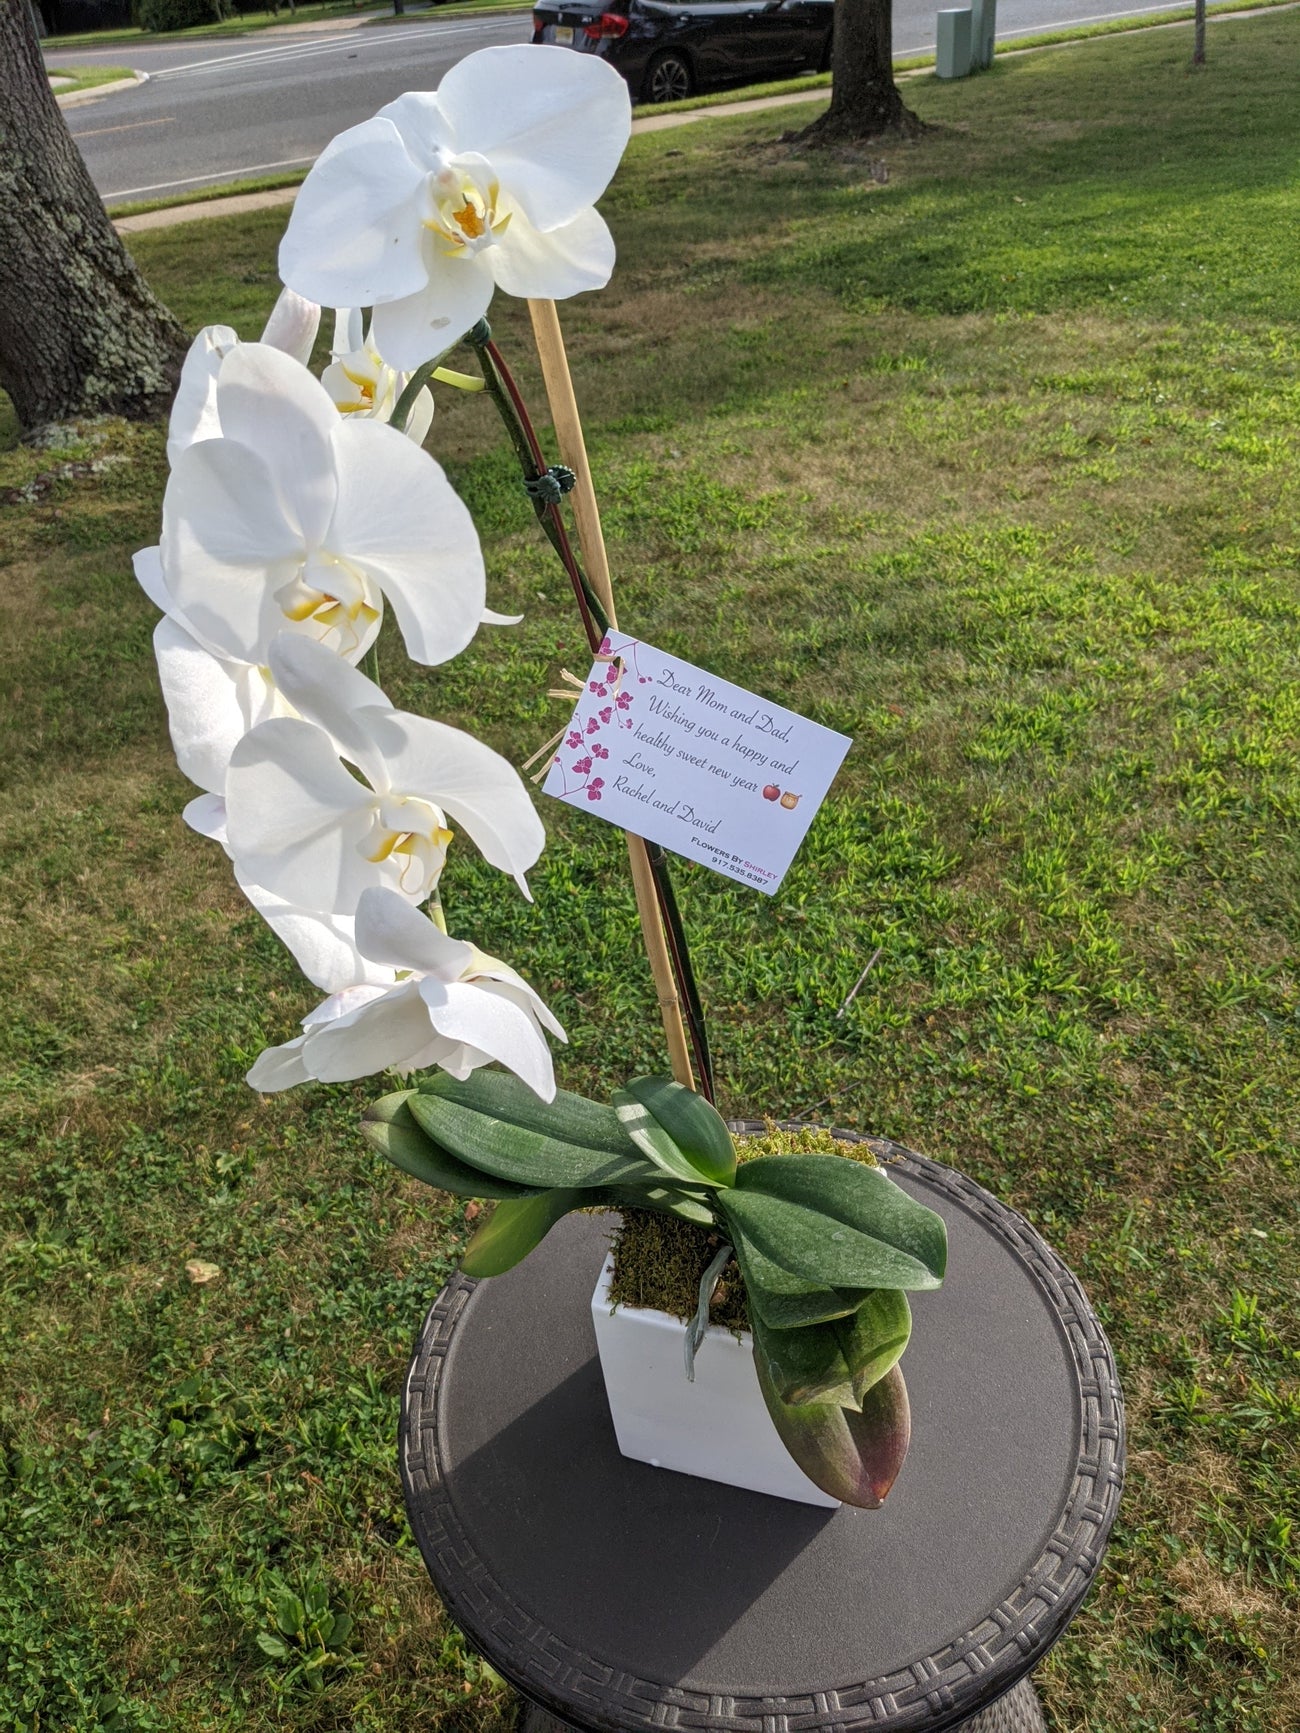 Single Stem Orchid Plant